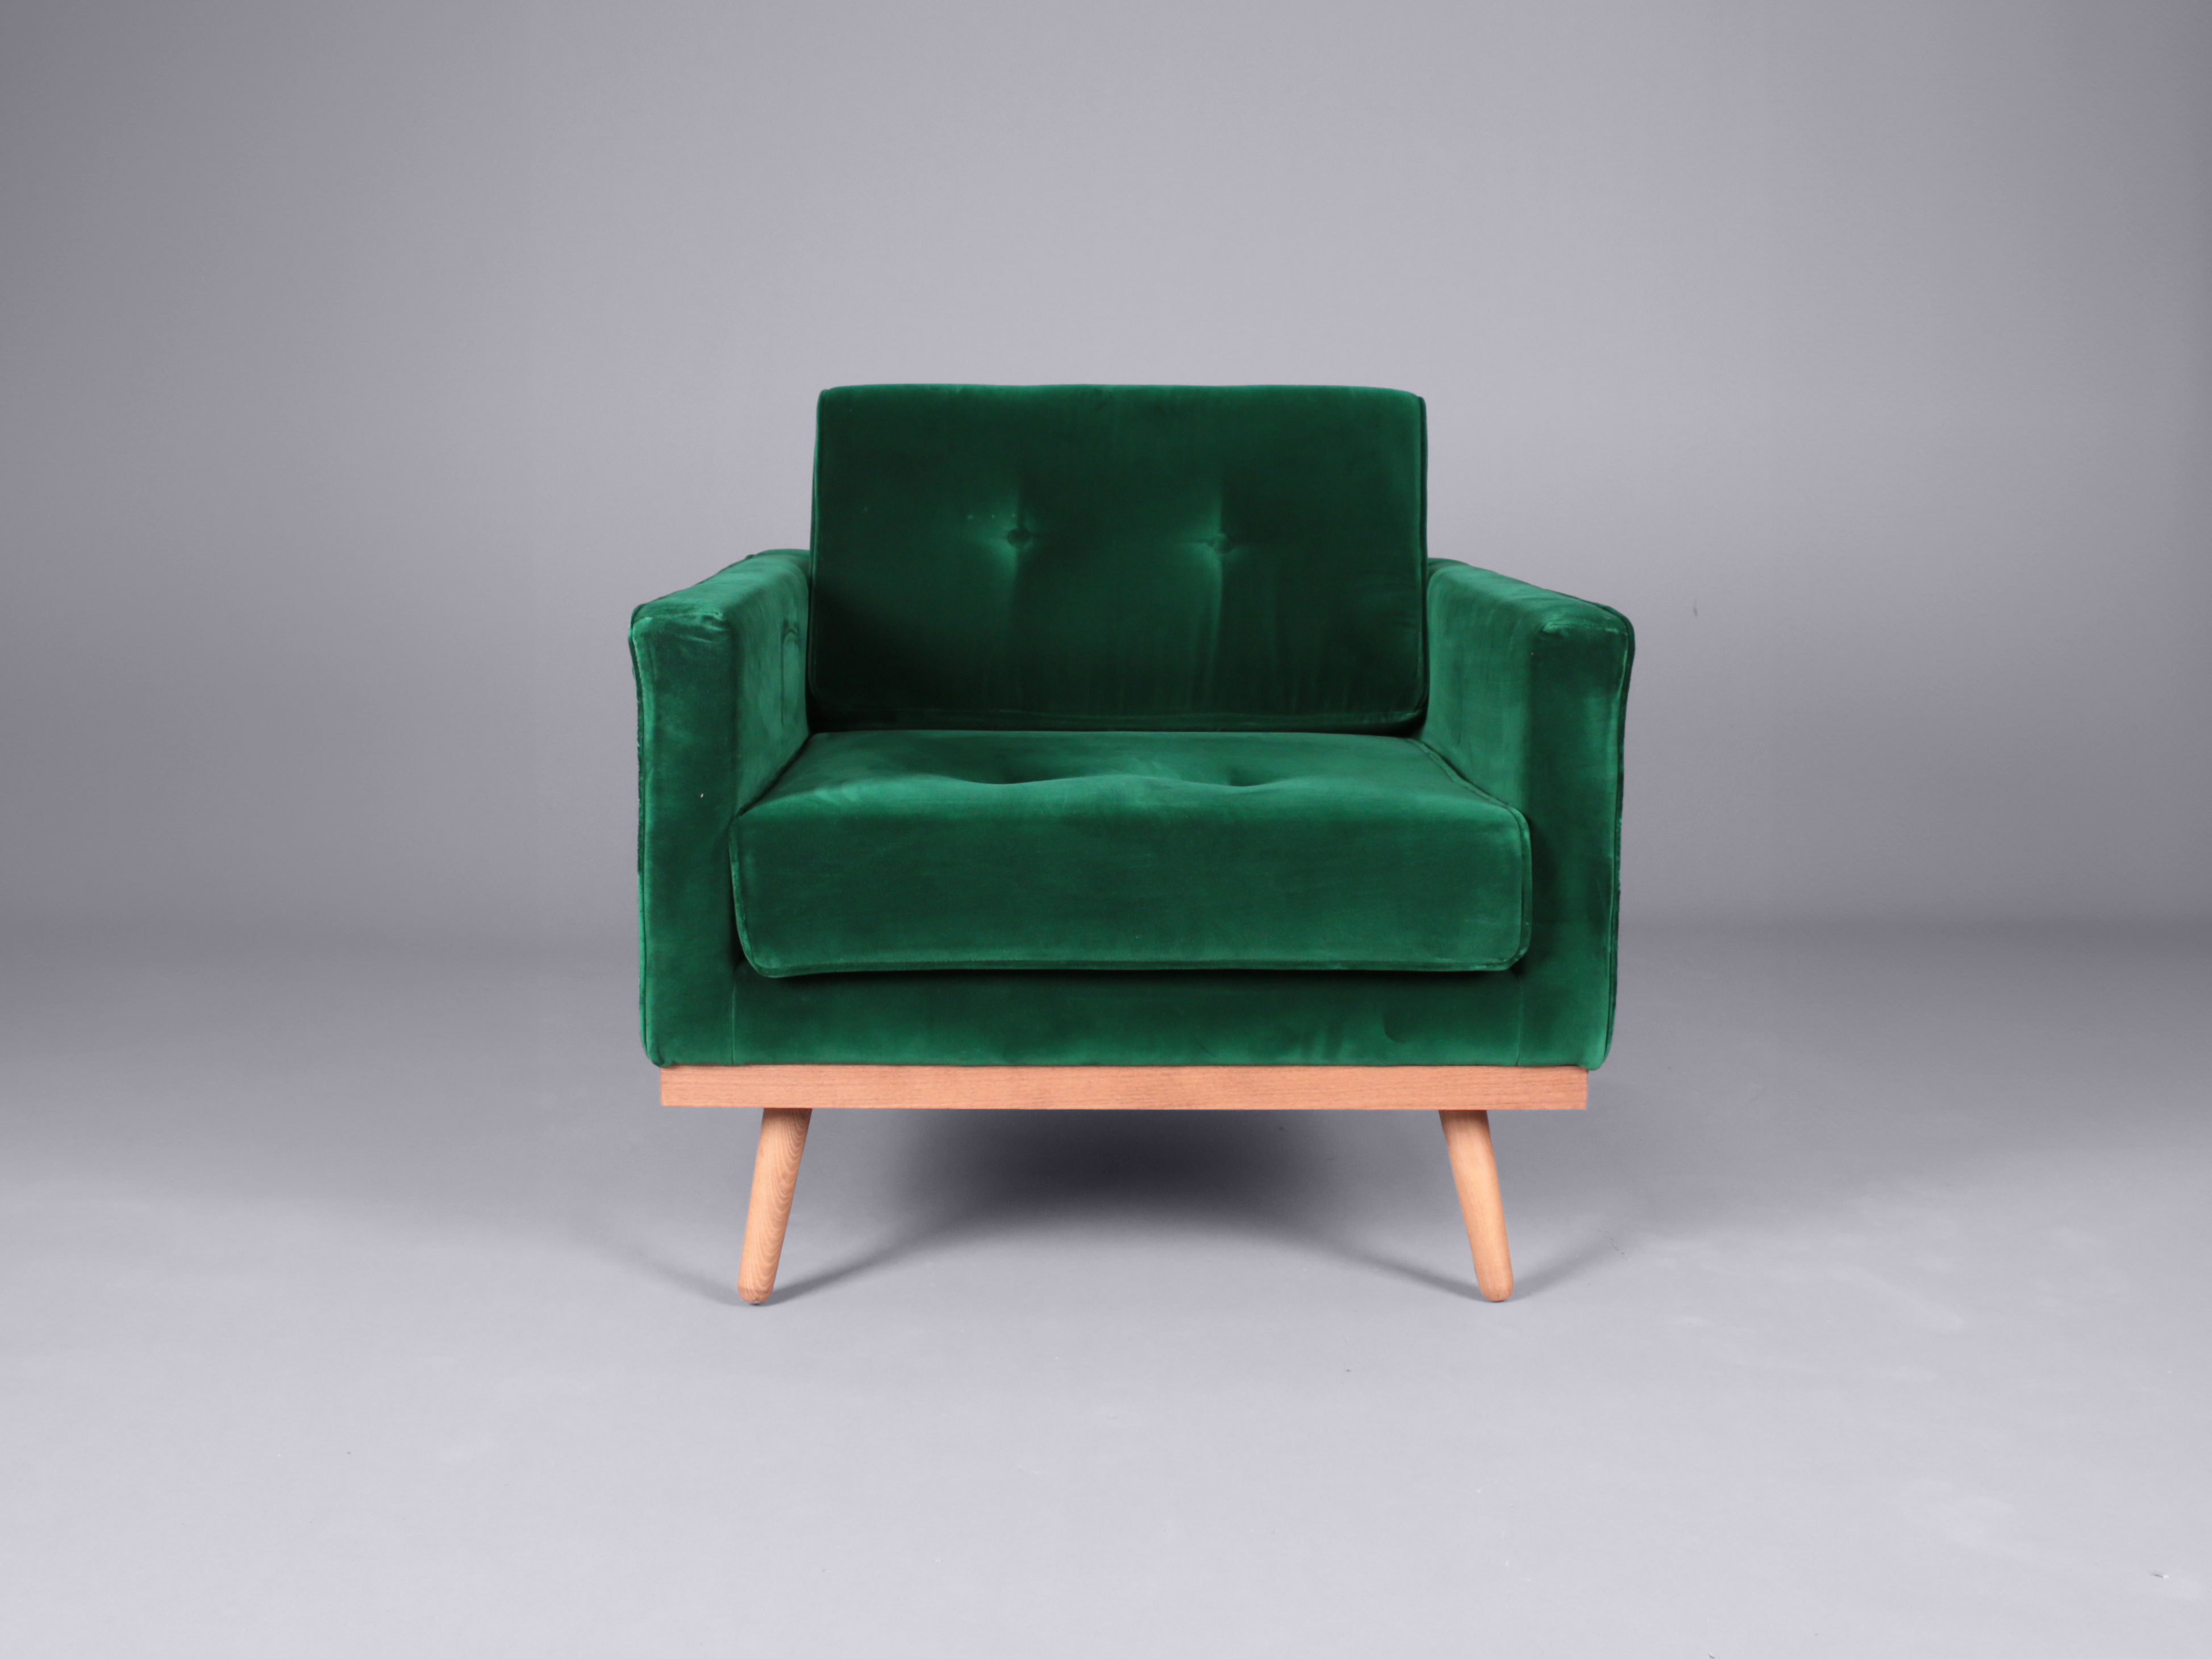 Maribo chair - green thumnail image